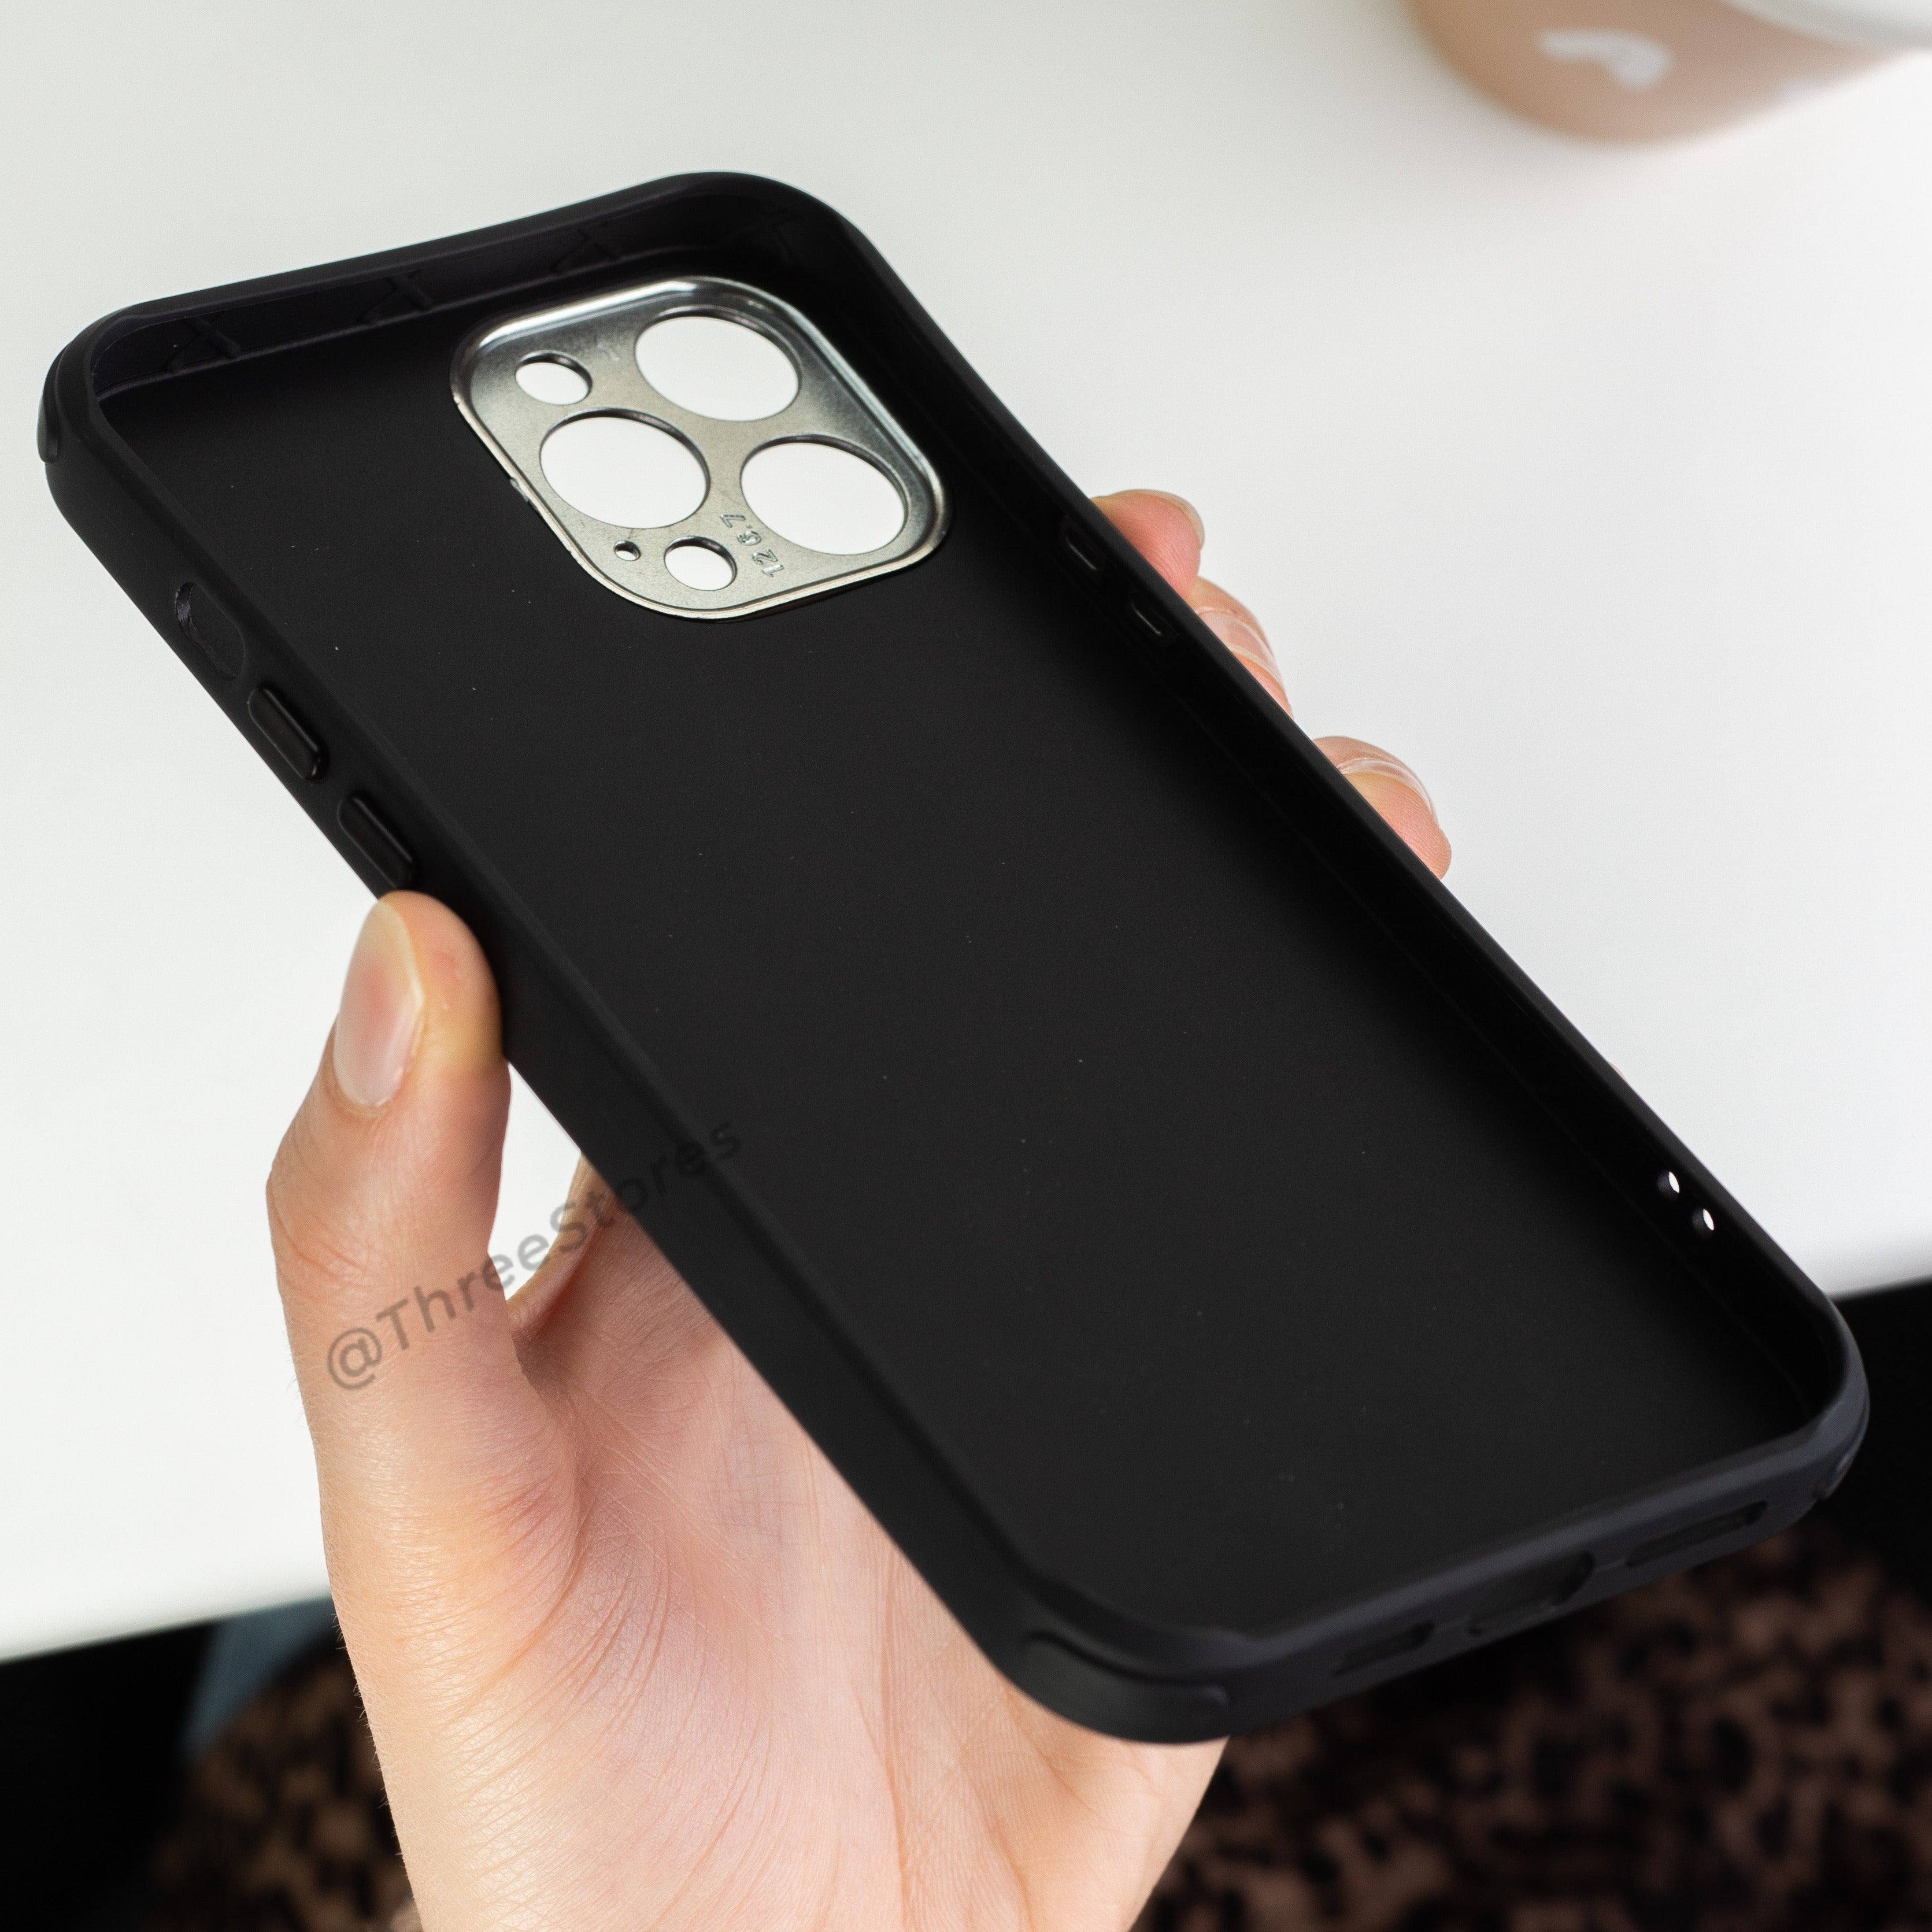 iRon Kenzo Case iPhone 11 Pro Max